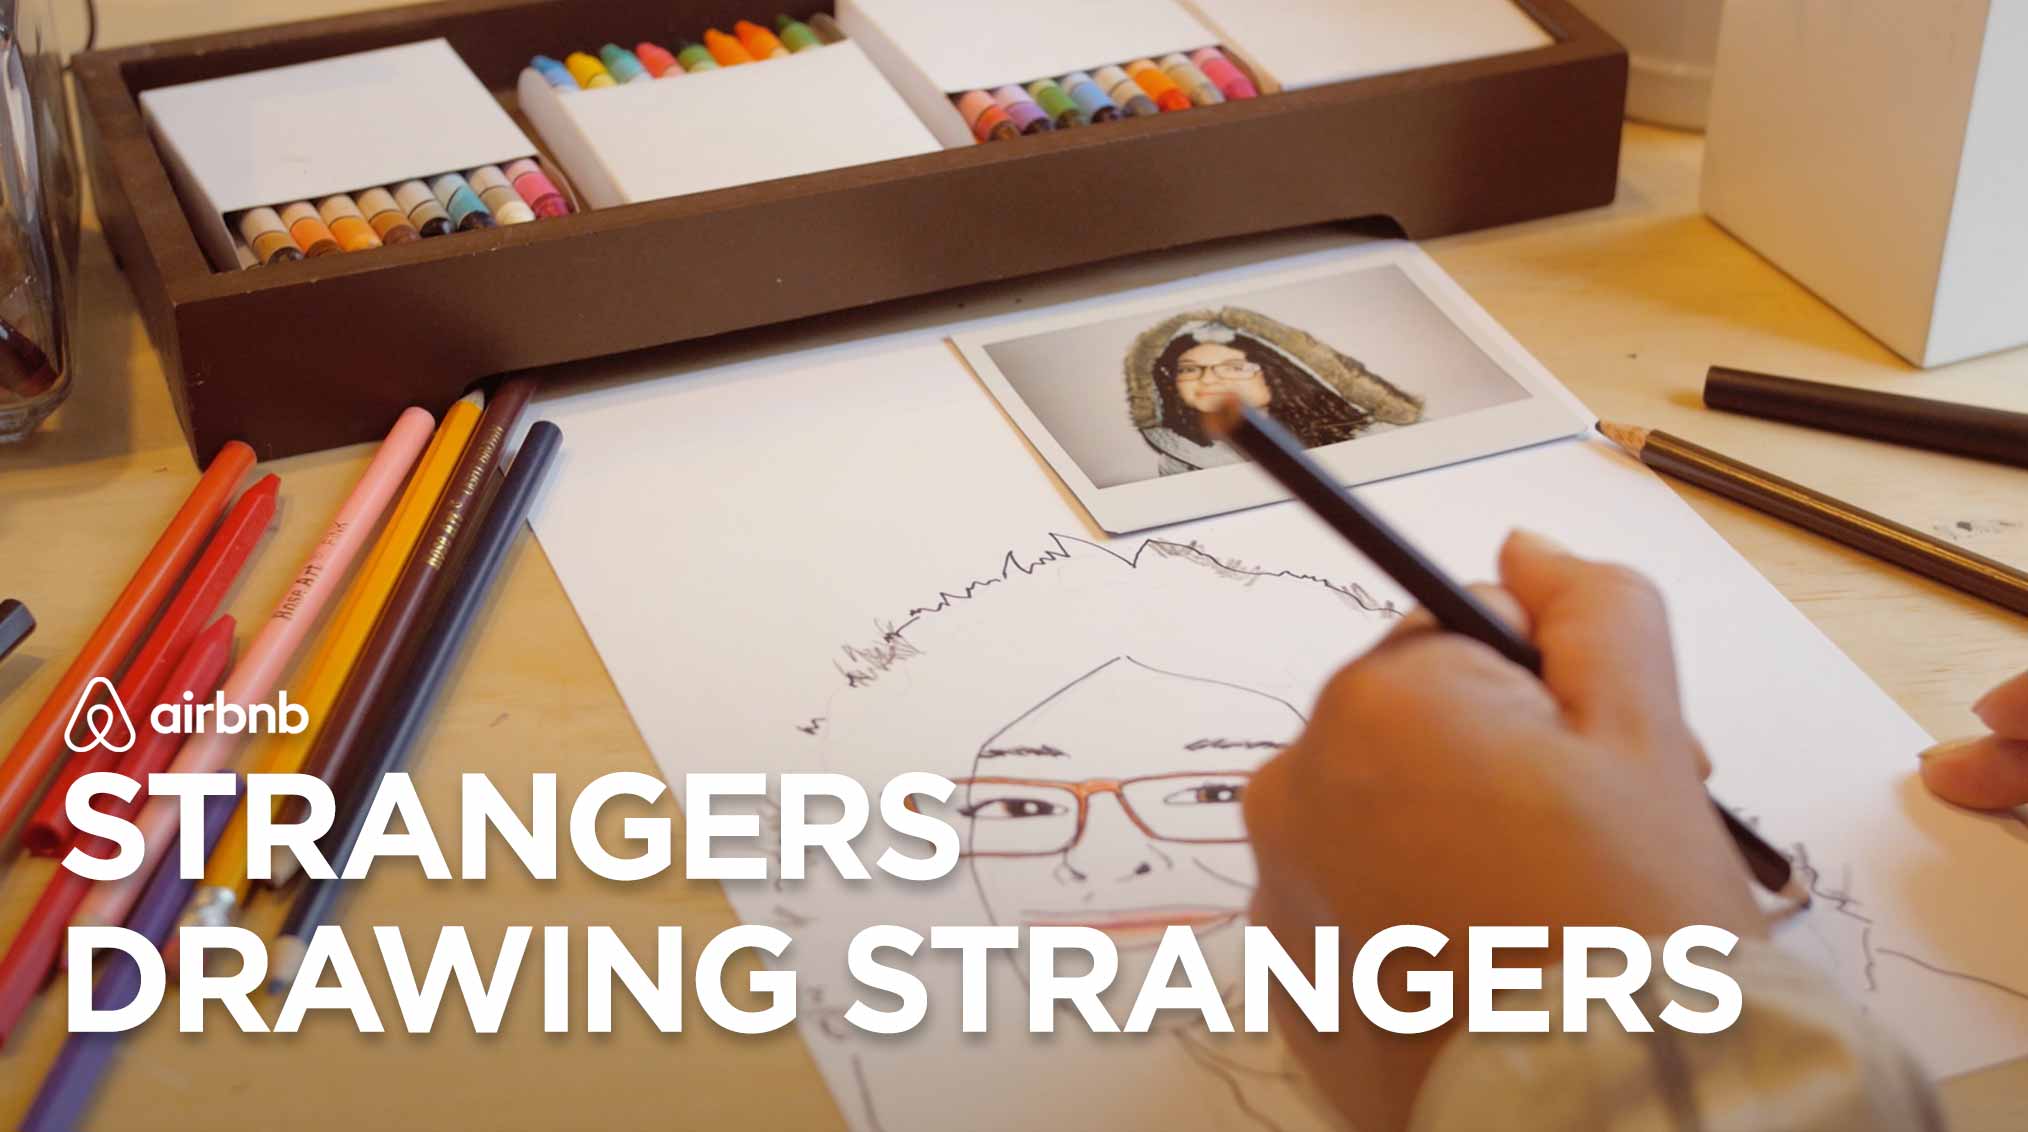 cash-studios-airbnb-strangers-drawing-strangers.jpg